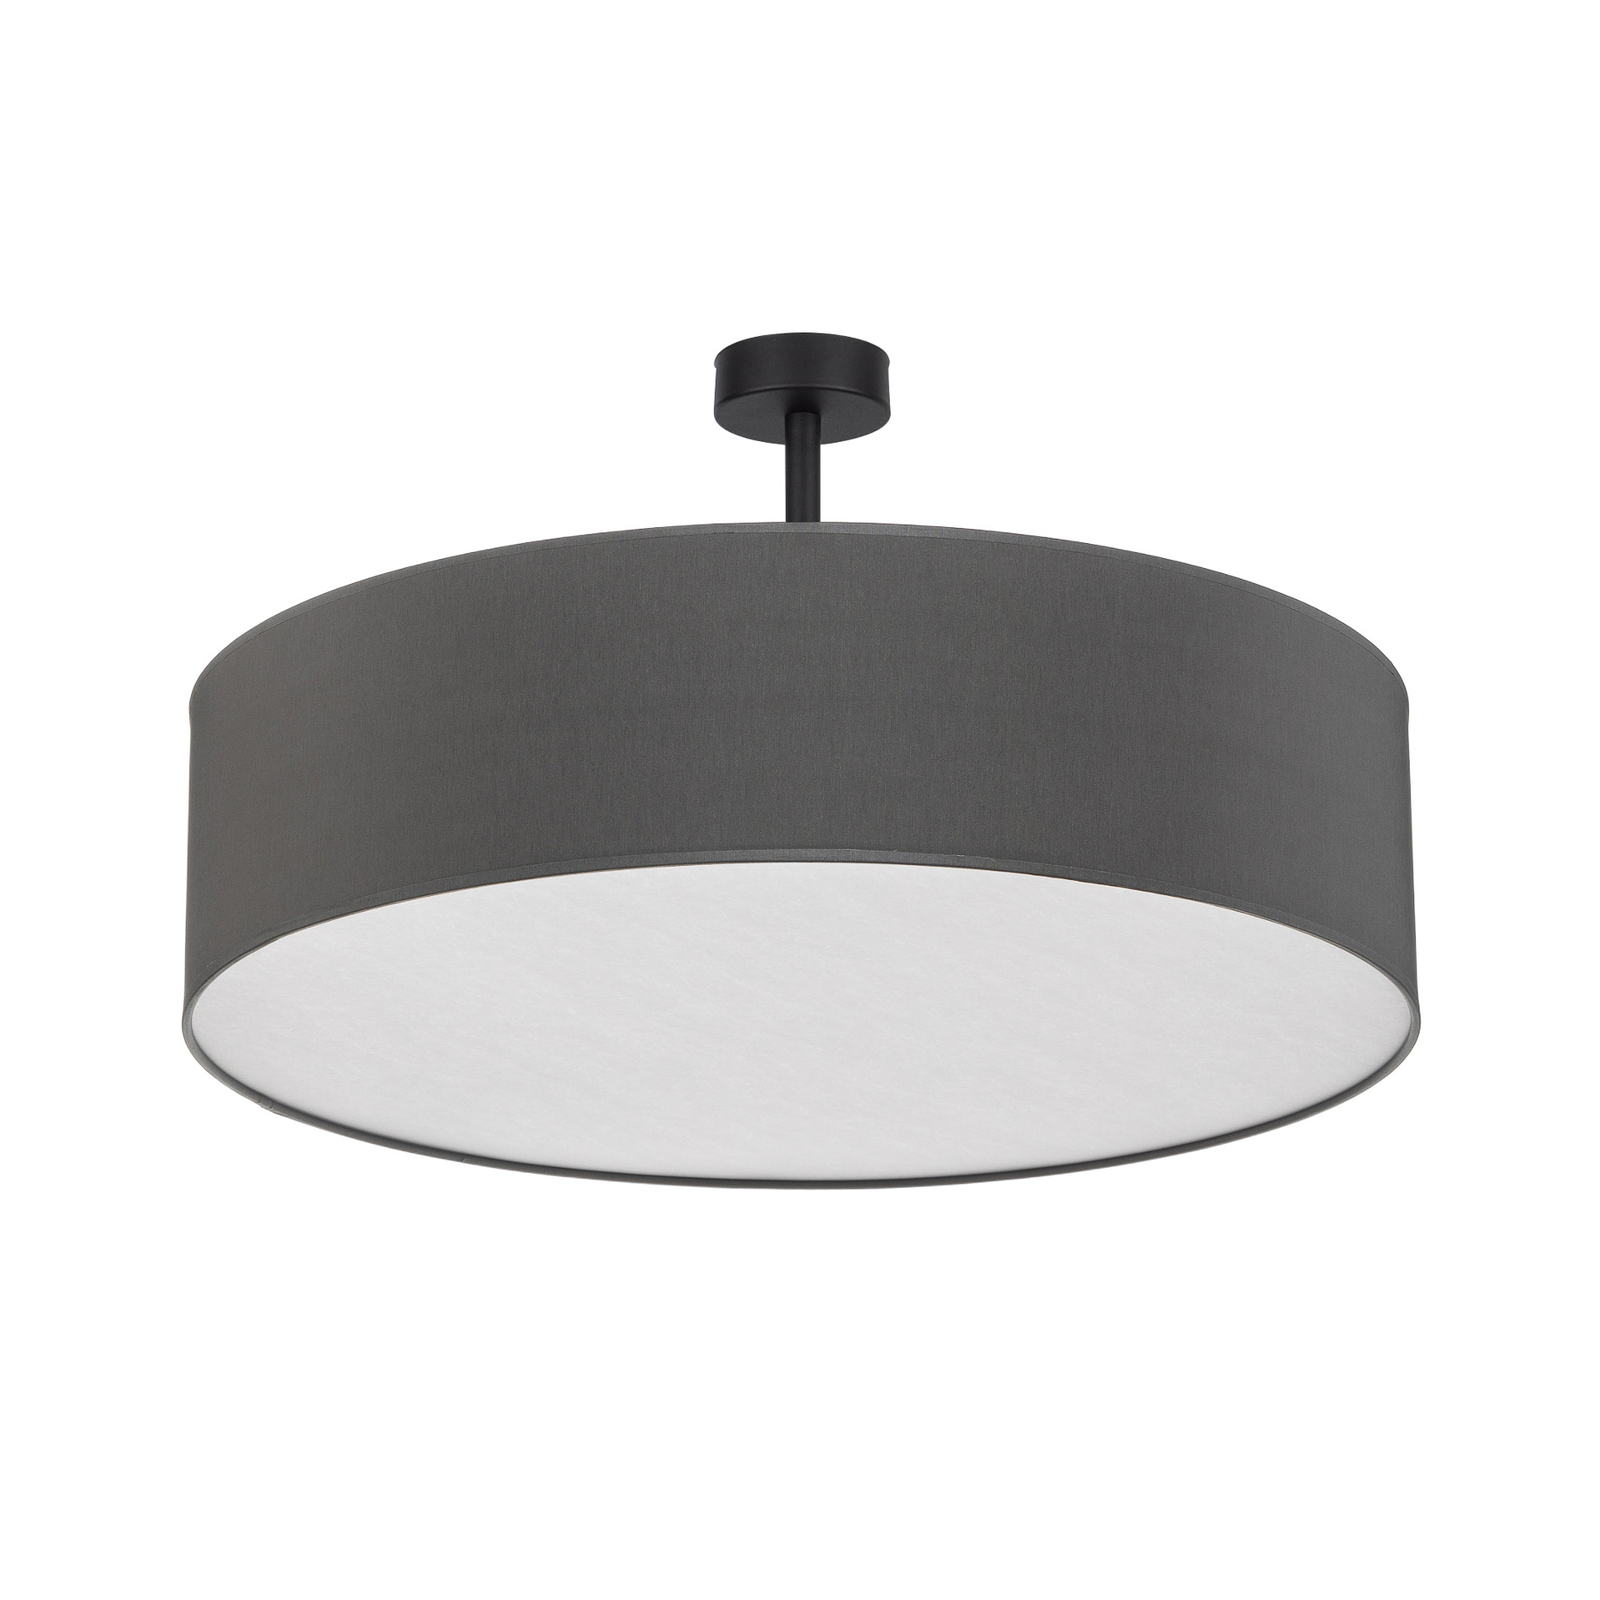 Rondo semi-flush ceiling light, grey Ø 60cm